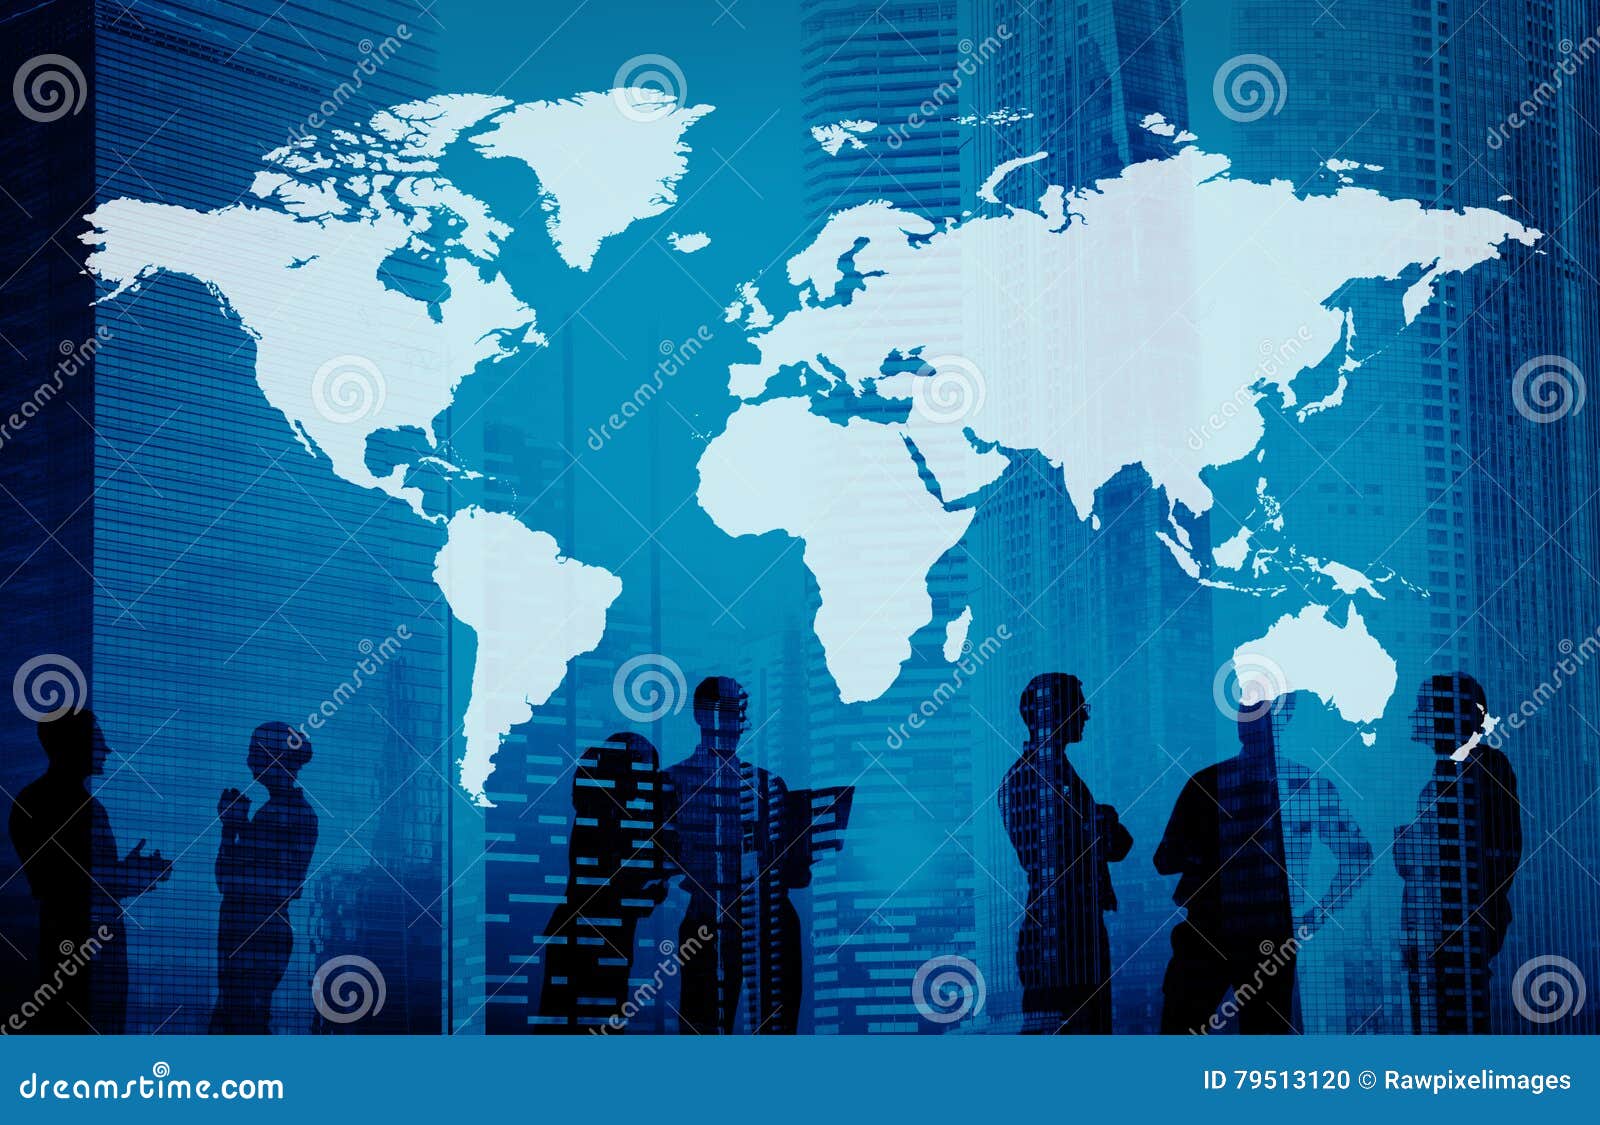 global world cartography business international concept